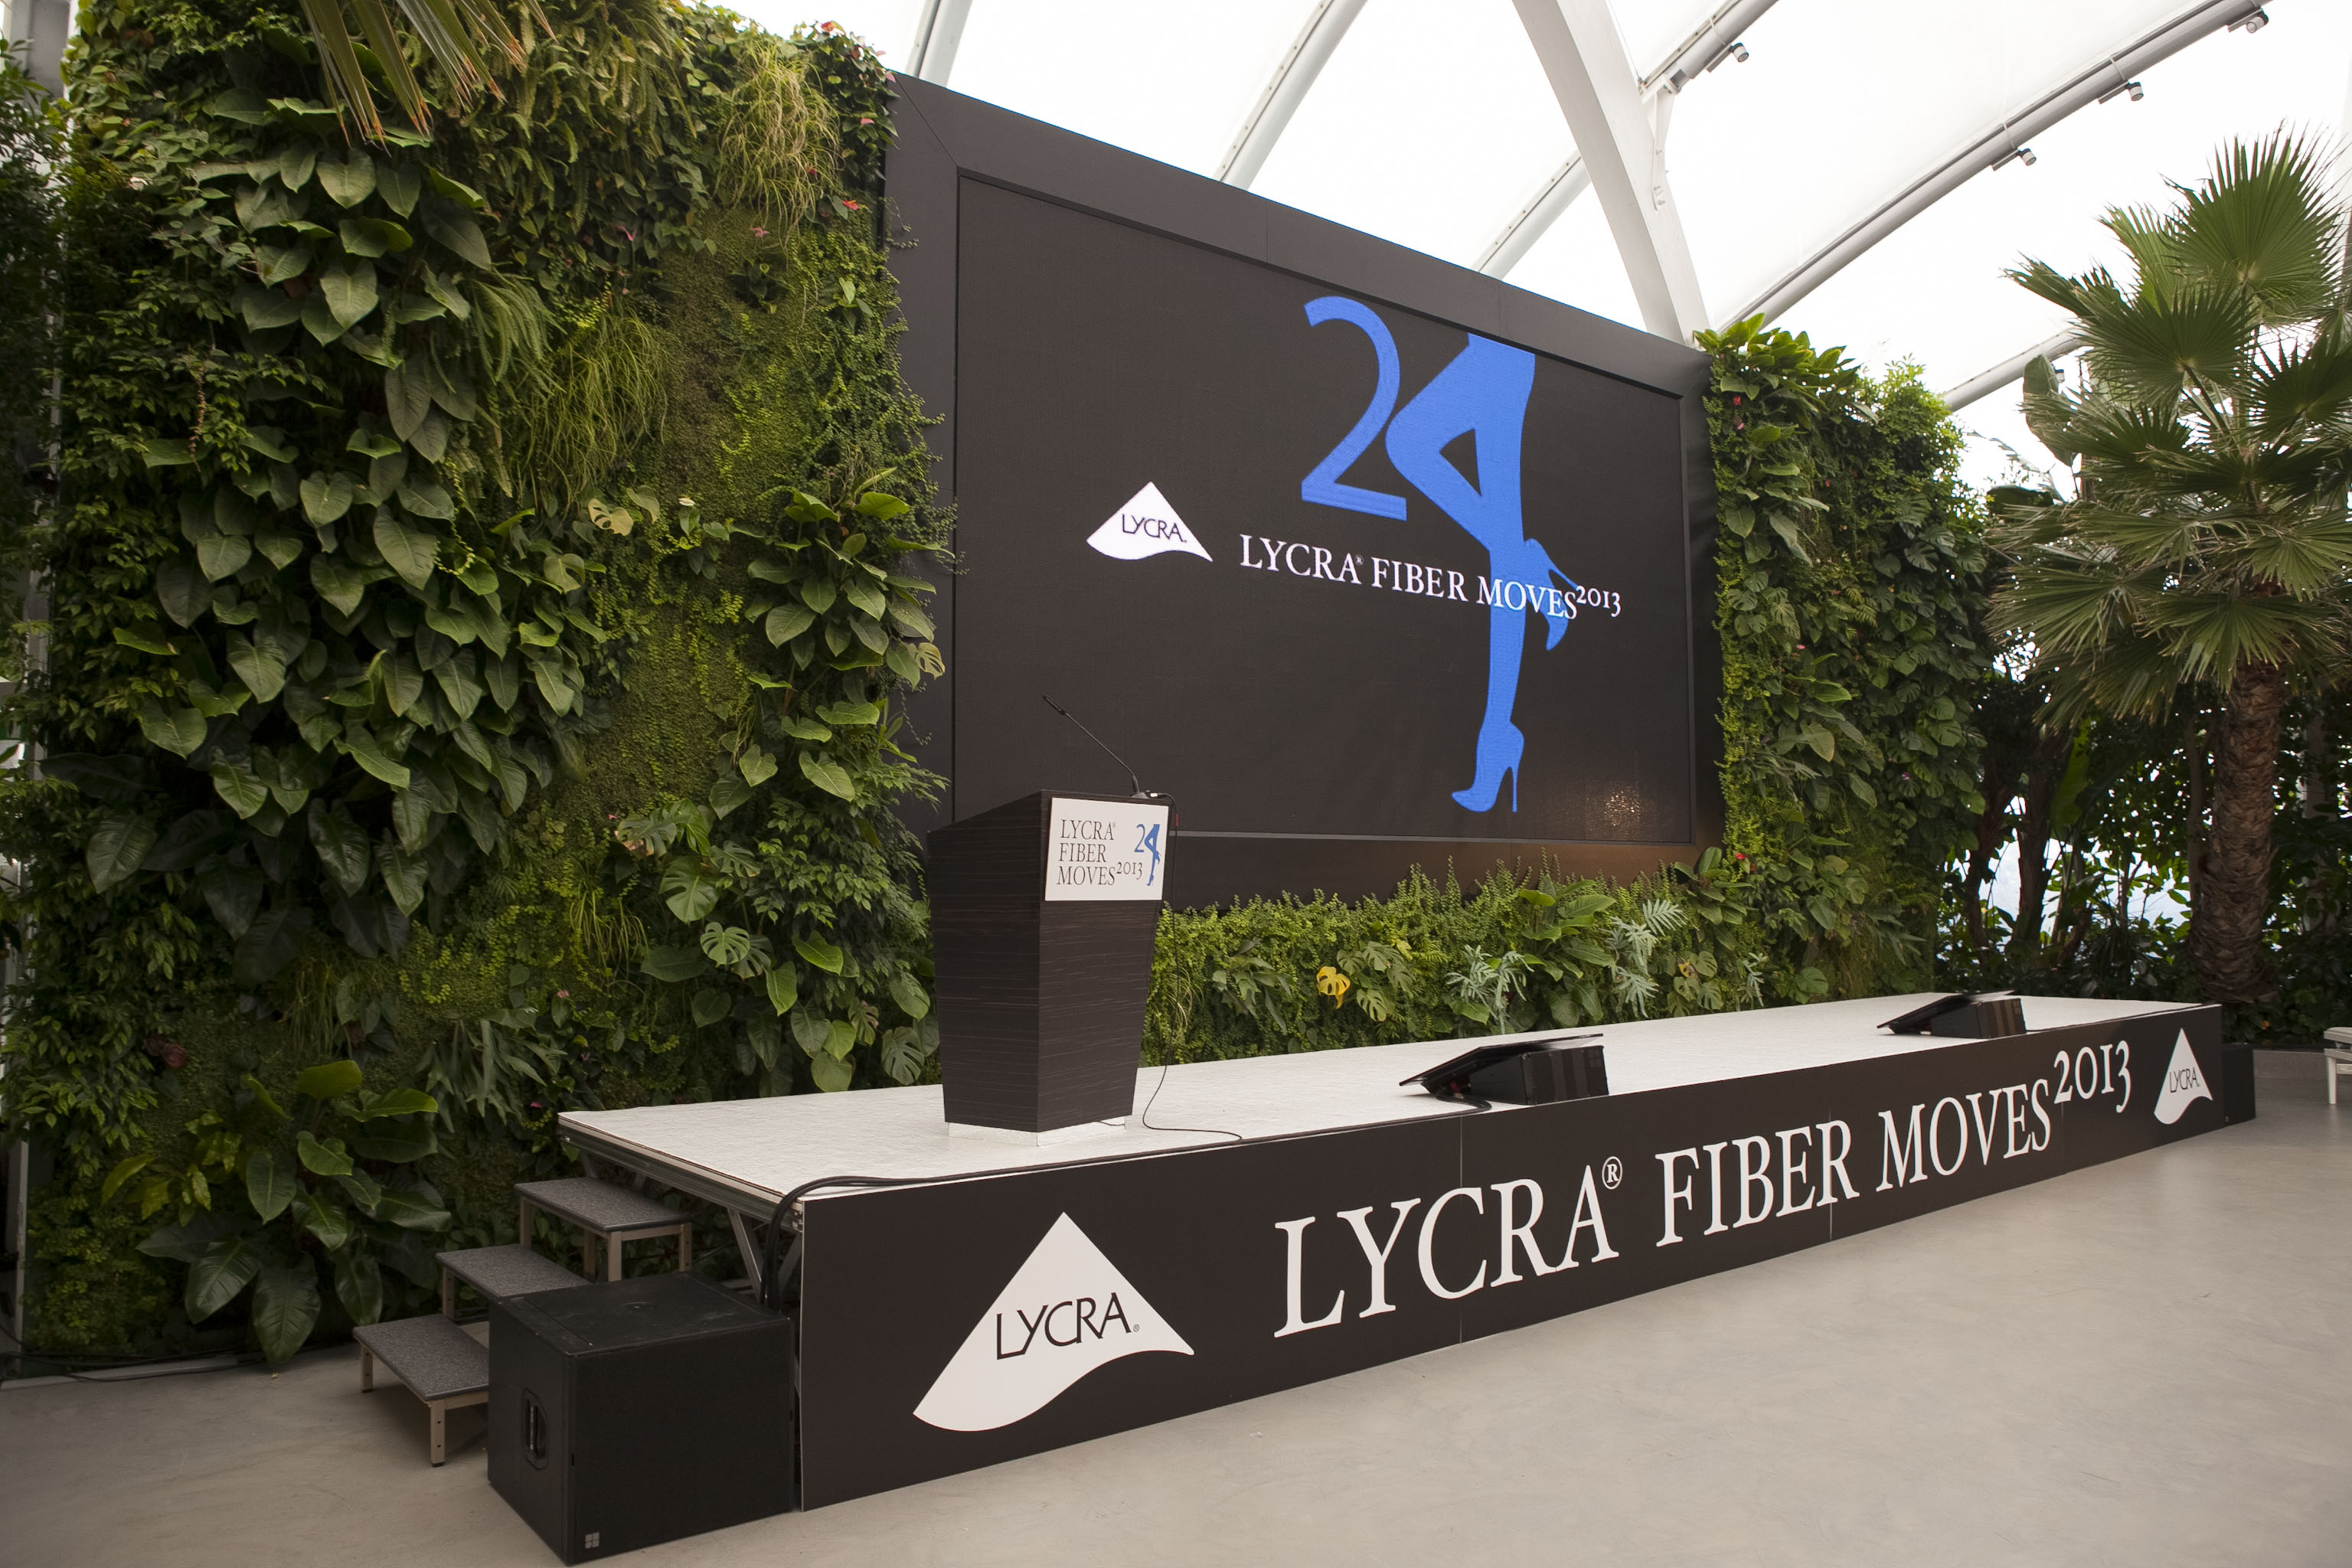  Lycra Fibre Moves 2013. © Invista